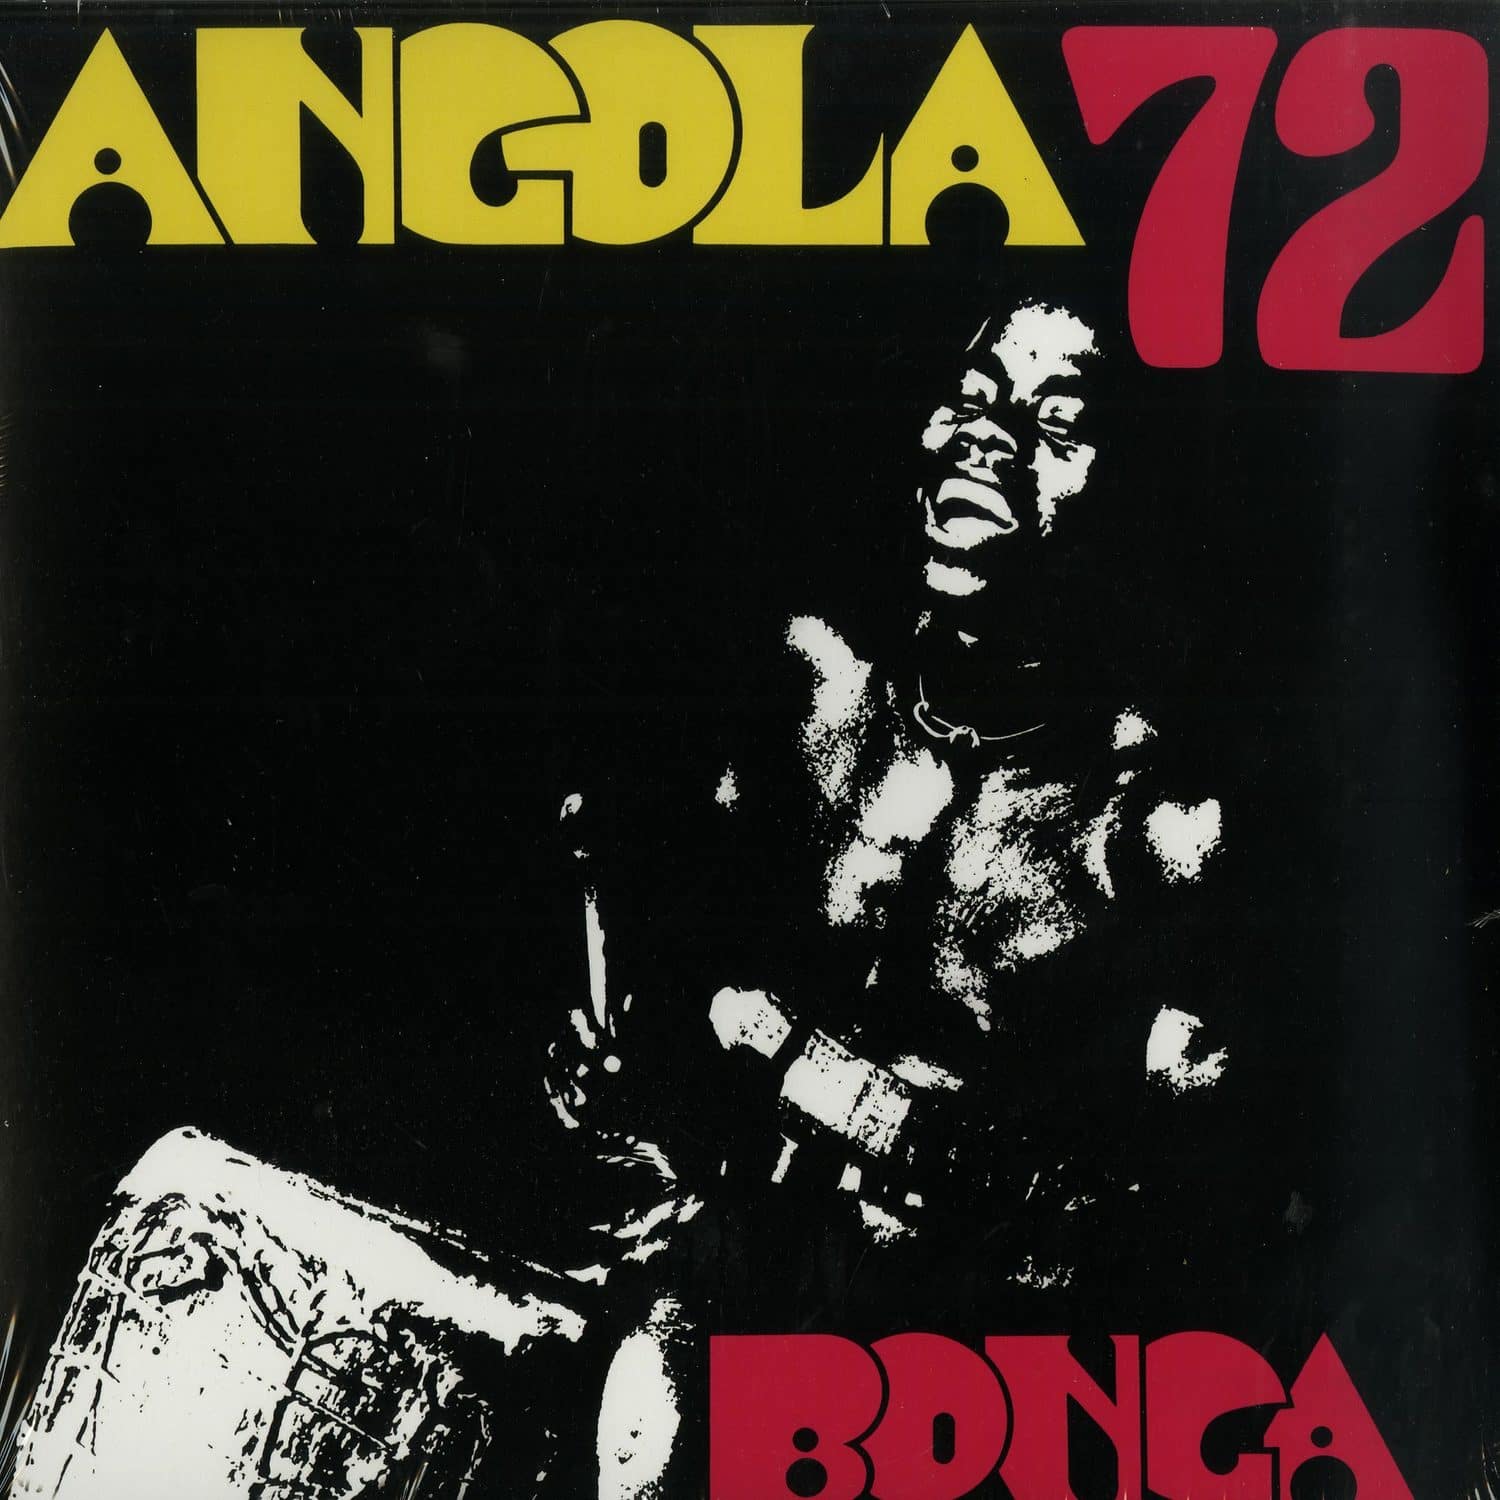 Bonga - ANGOLA 72 